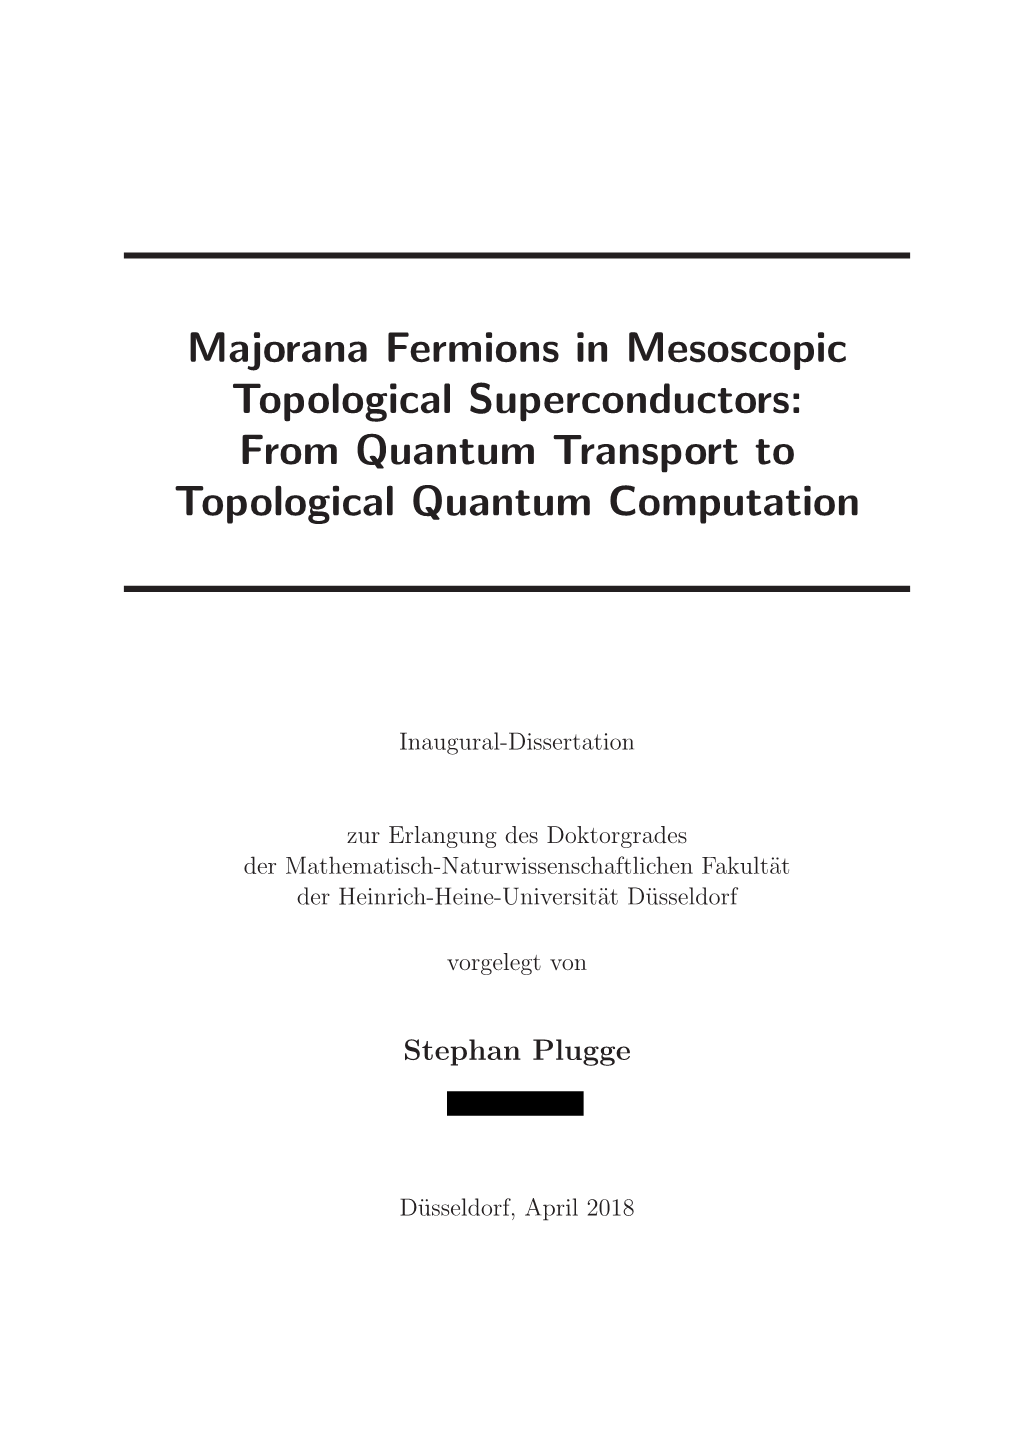 Majorana Fermions in Mesoscopic Topological Superconductors: from Quantum Transport to Topological Quantum Computation